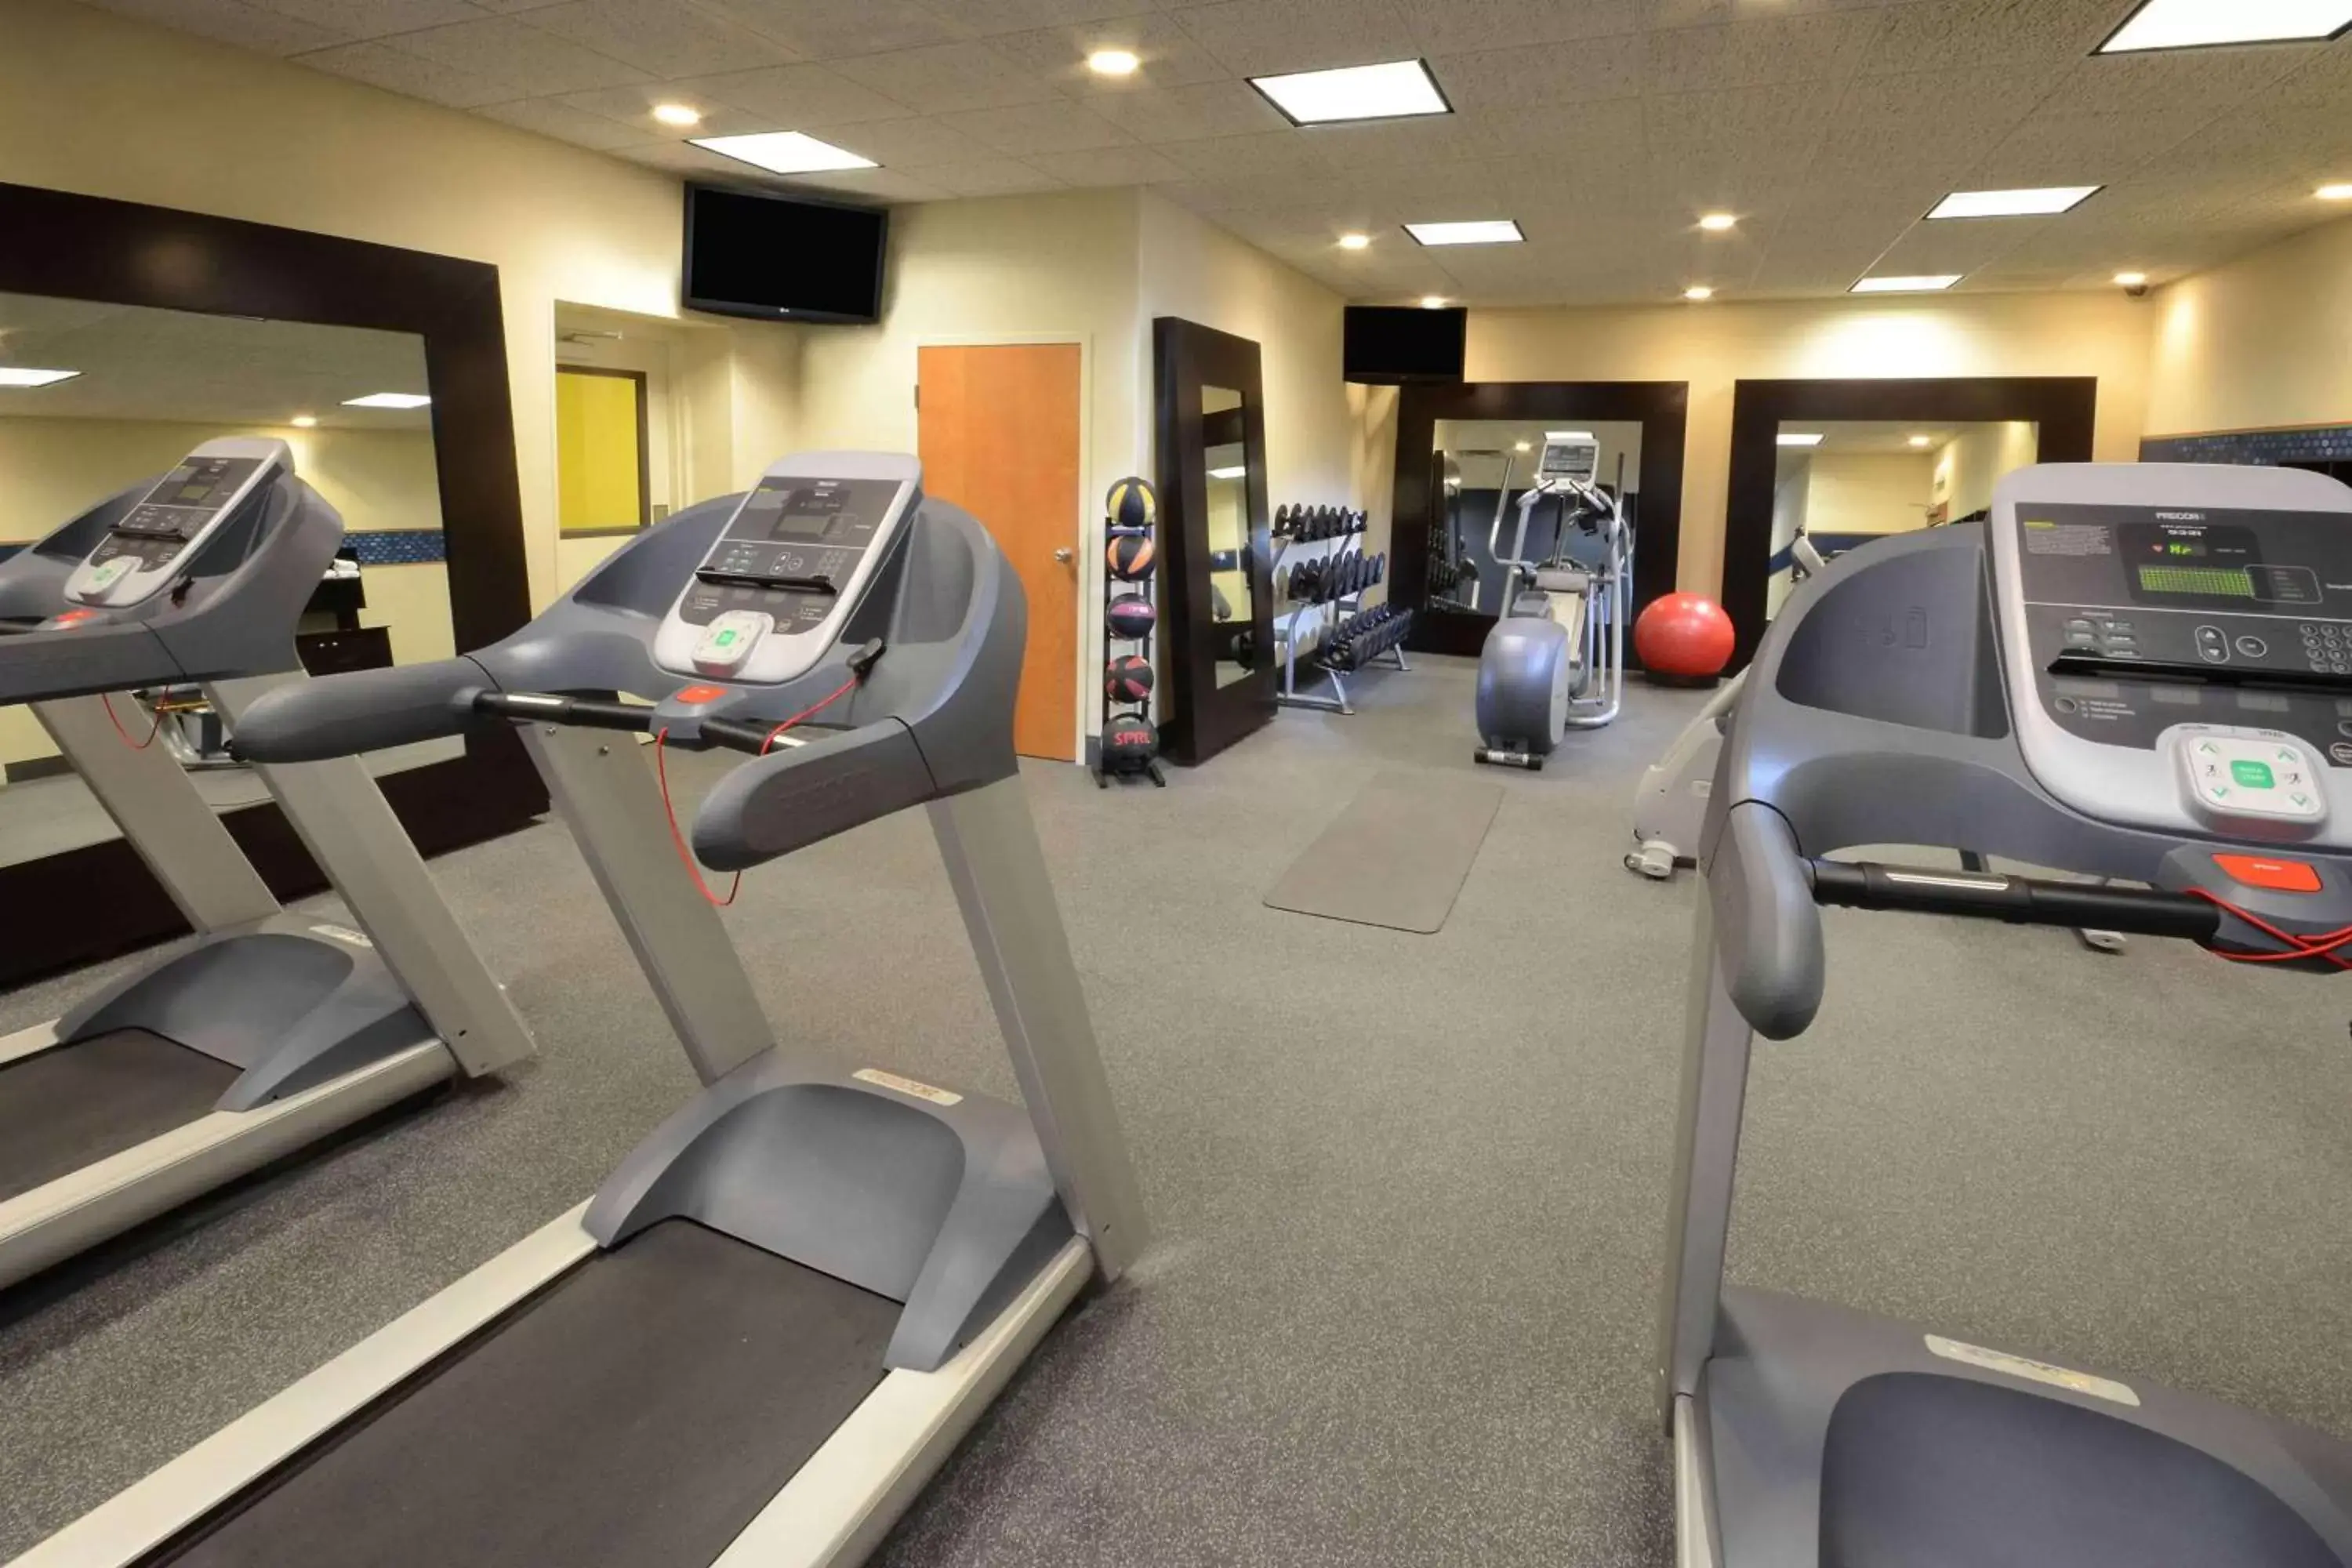 Fitness centre/facilities, Fitness Center/Facilities in Hampton Inn Fayetteville Fort Bragg